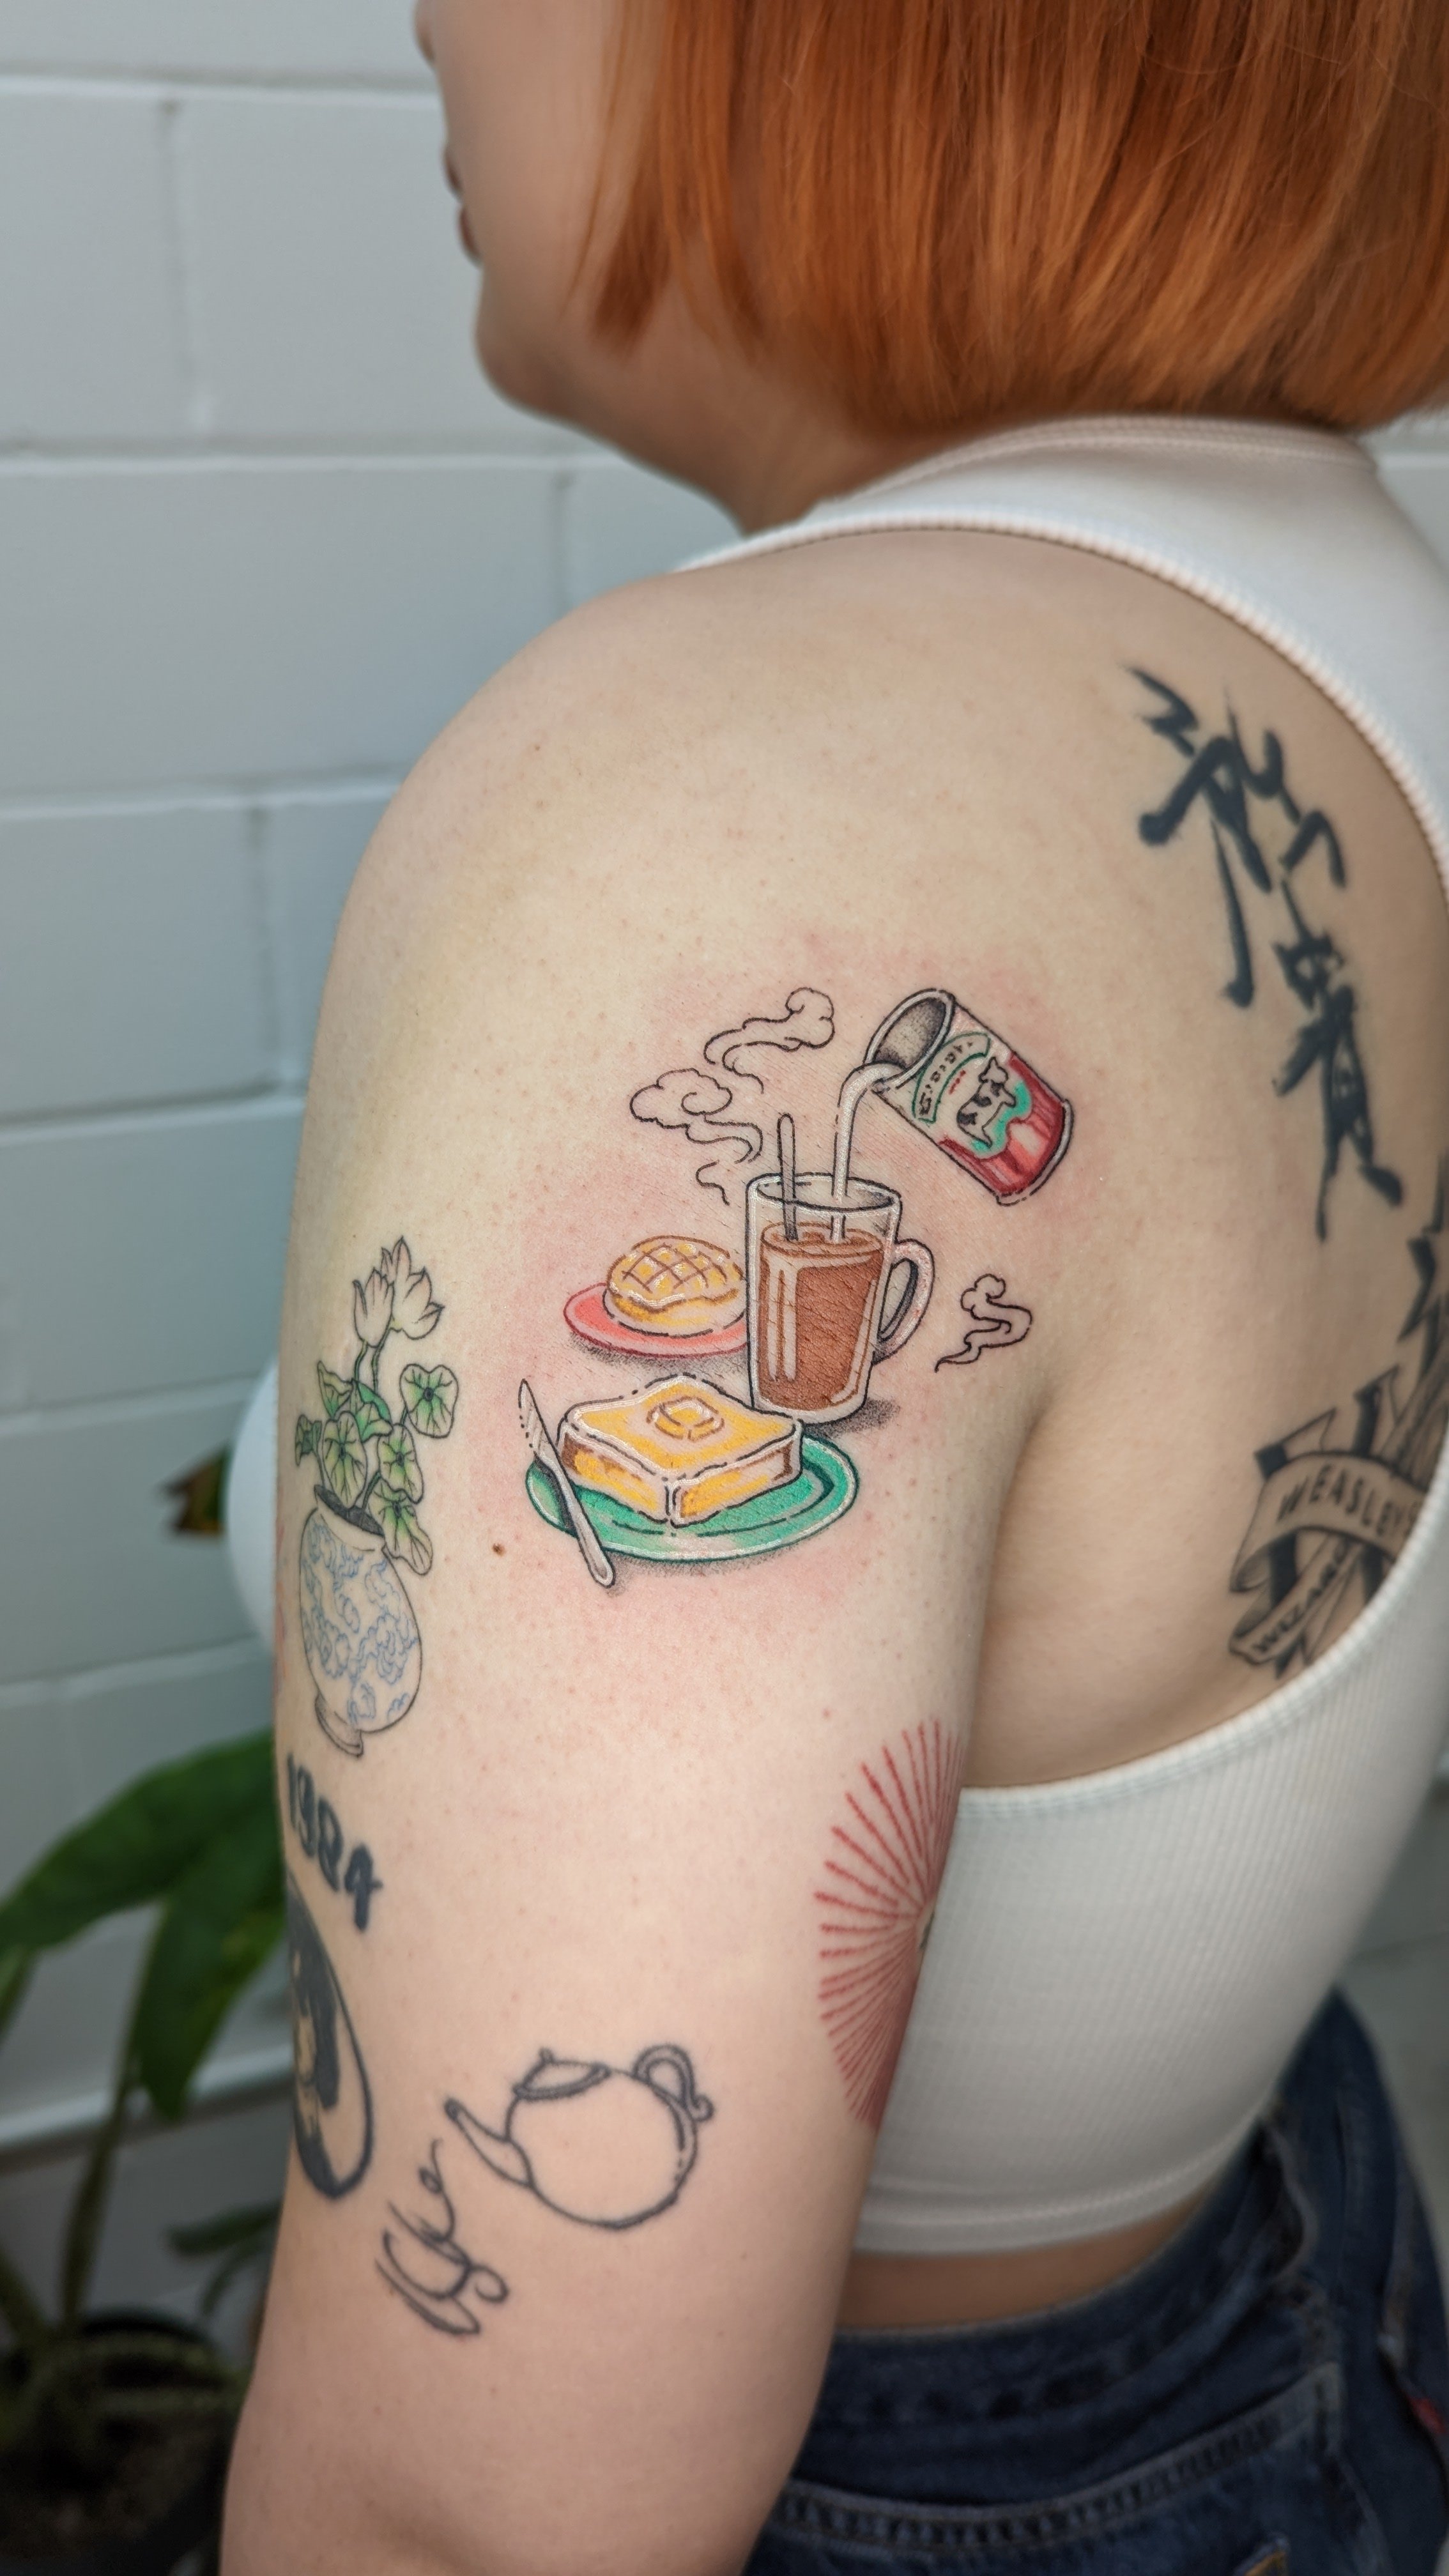 A cha chaan teng-inspired tattoo that Leung has done on a customer. CREDIT: Georgina Leung